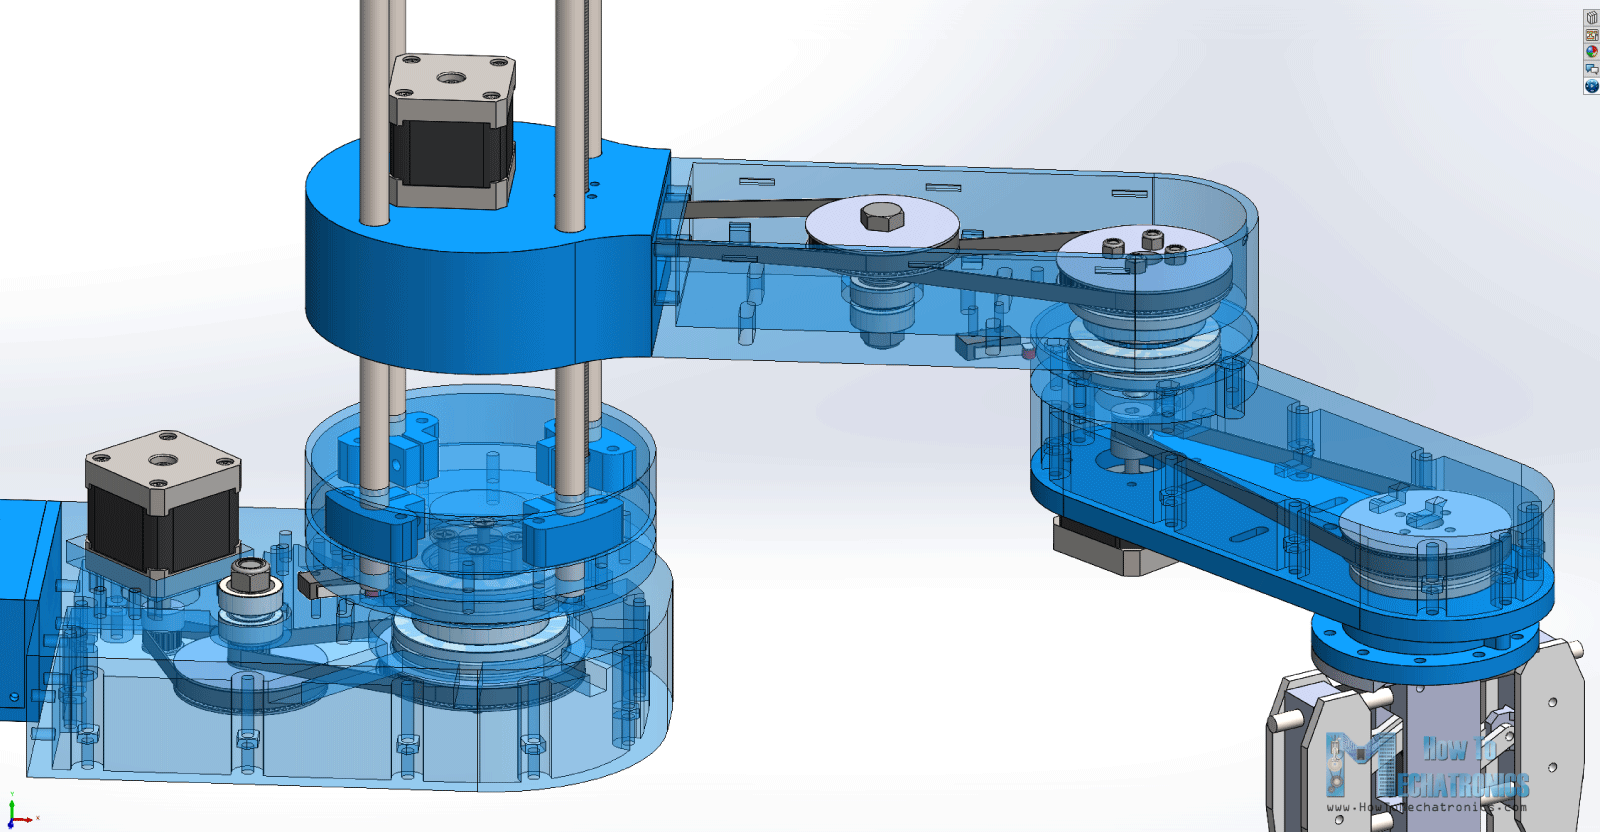 SCARA Robot internal components - 3D Model